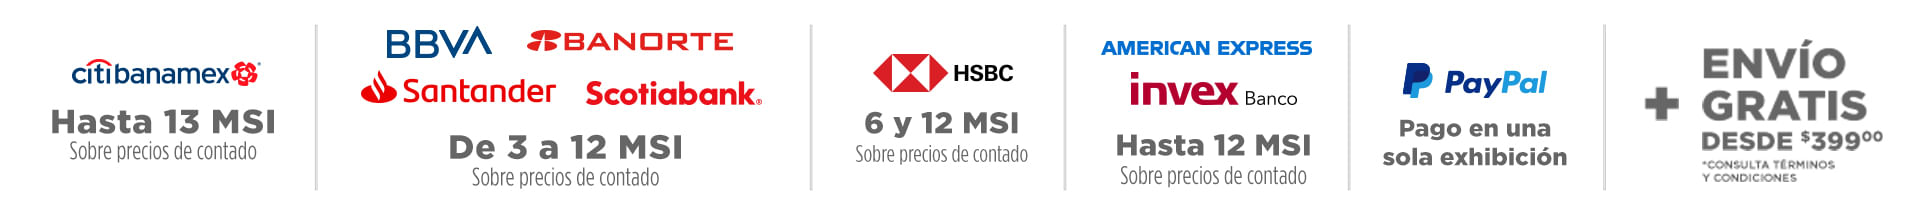 Aprovecha Hasta 12 Meses sin intereses con BBVA, Citi, Banorte, Santander, American Express y HSBC